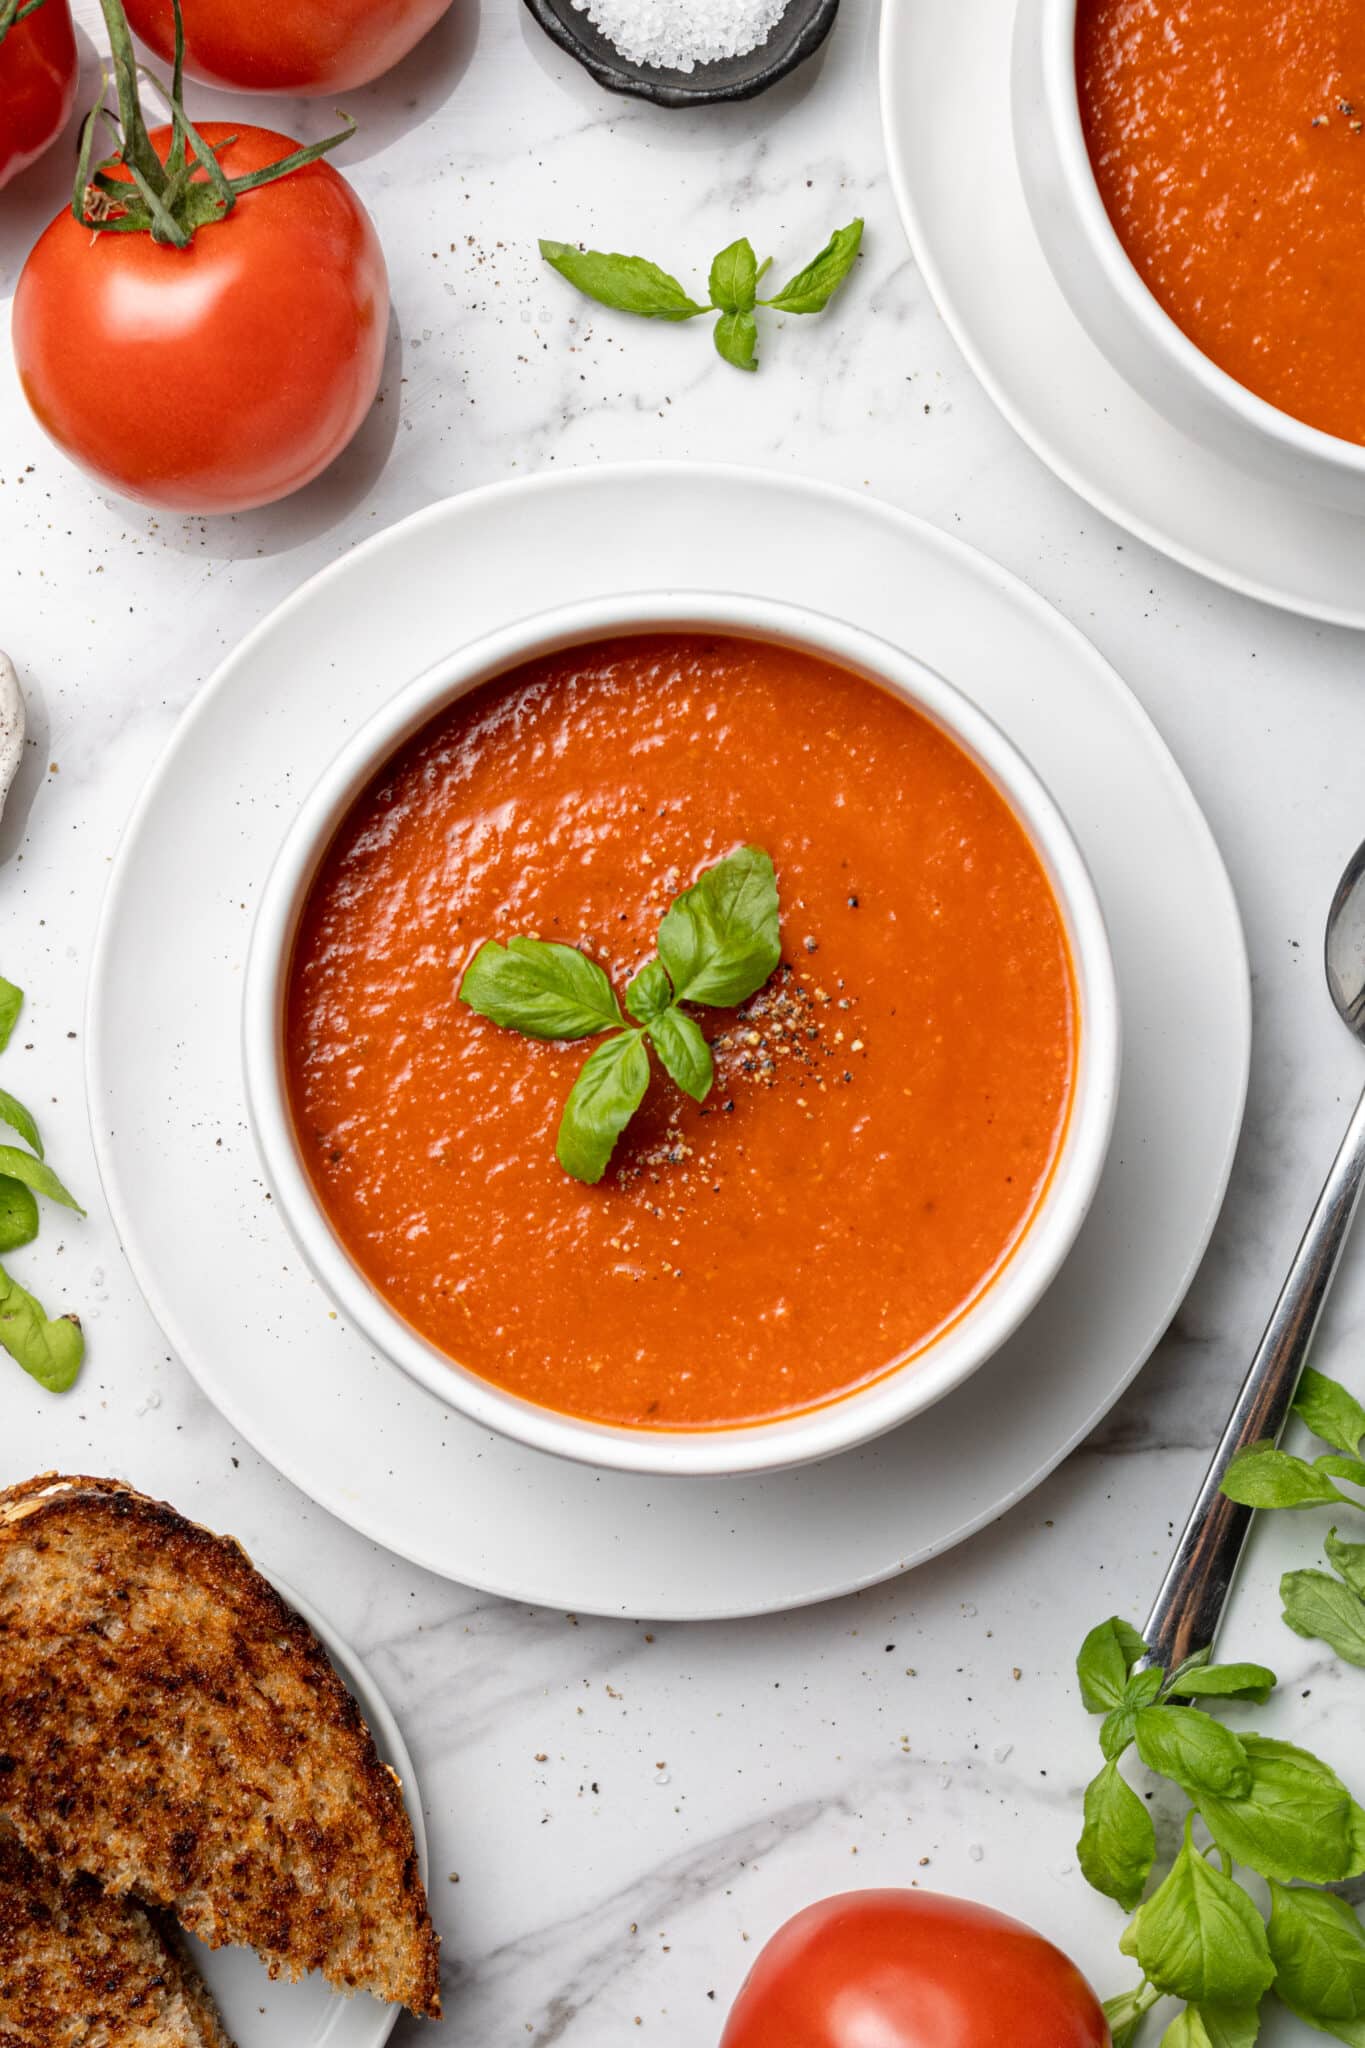 https://www.simplylakita.com/wp-content/uploads/2021/11/Homemade-Tomato-Soup-Simply-LaKita-1-scaled.jpg